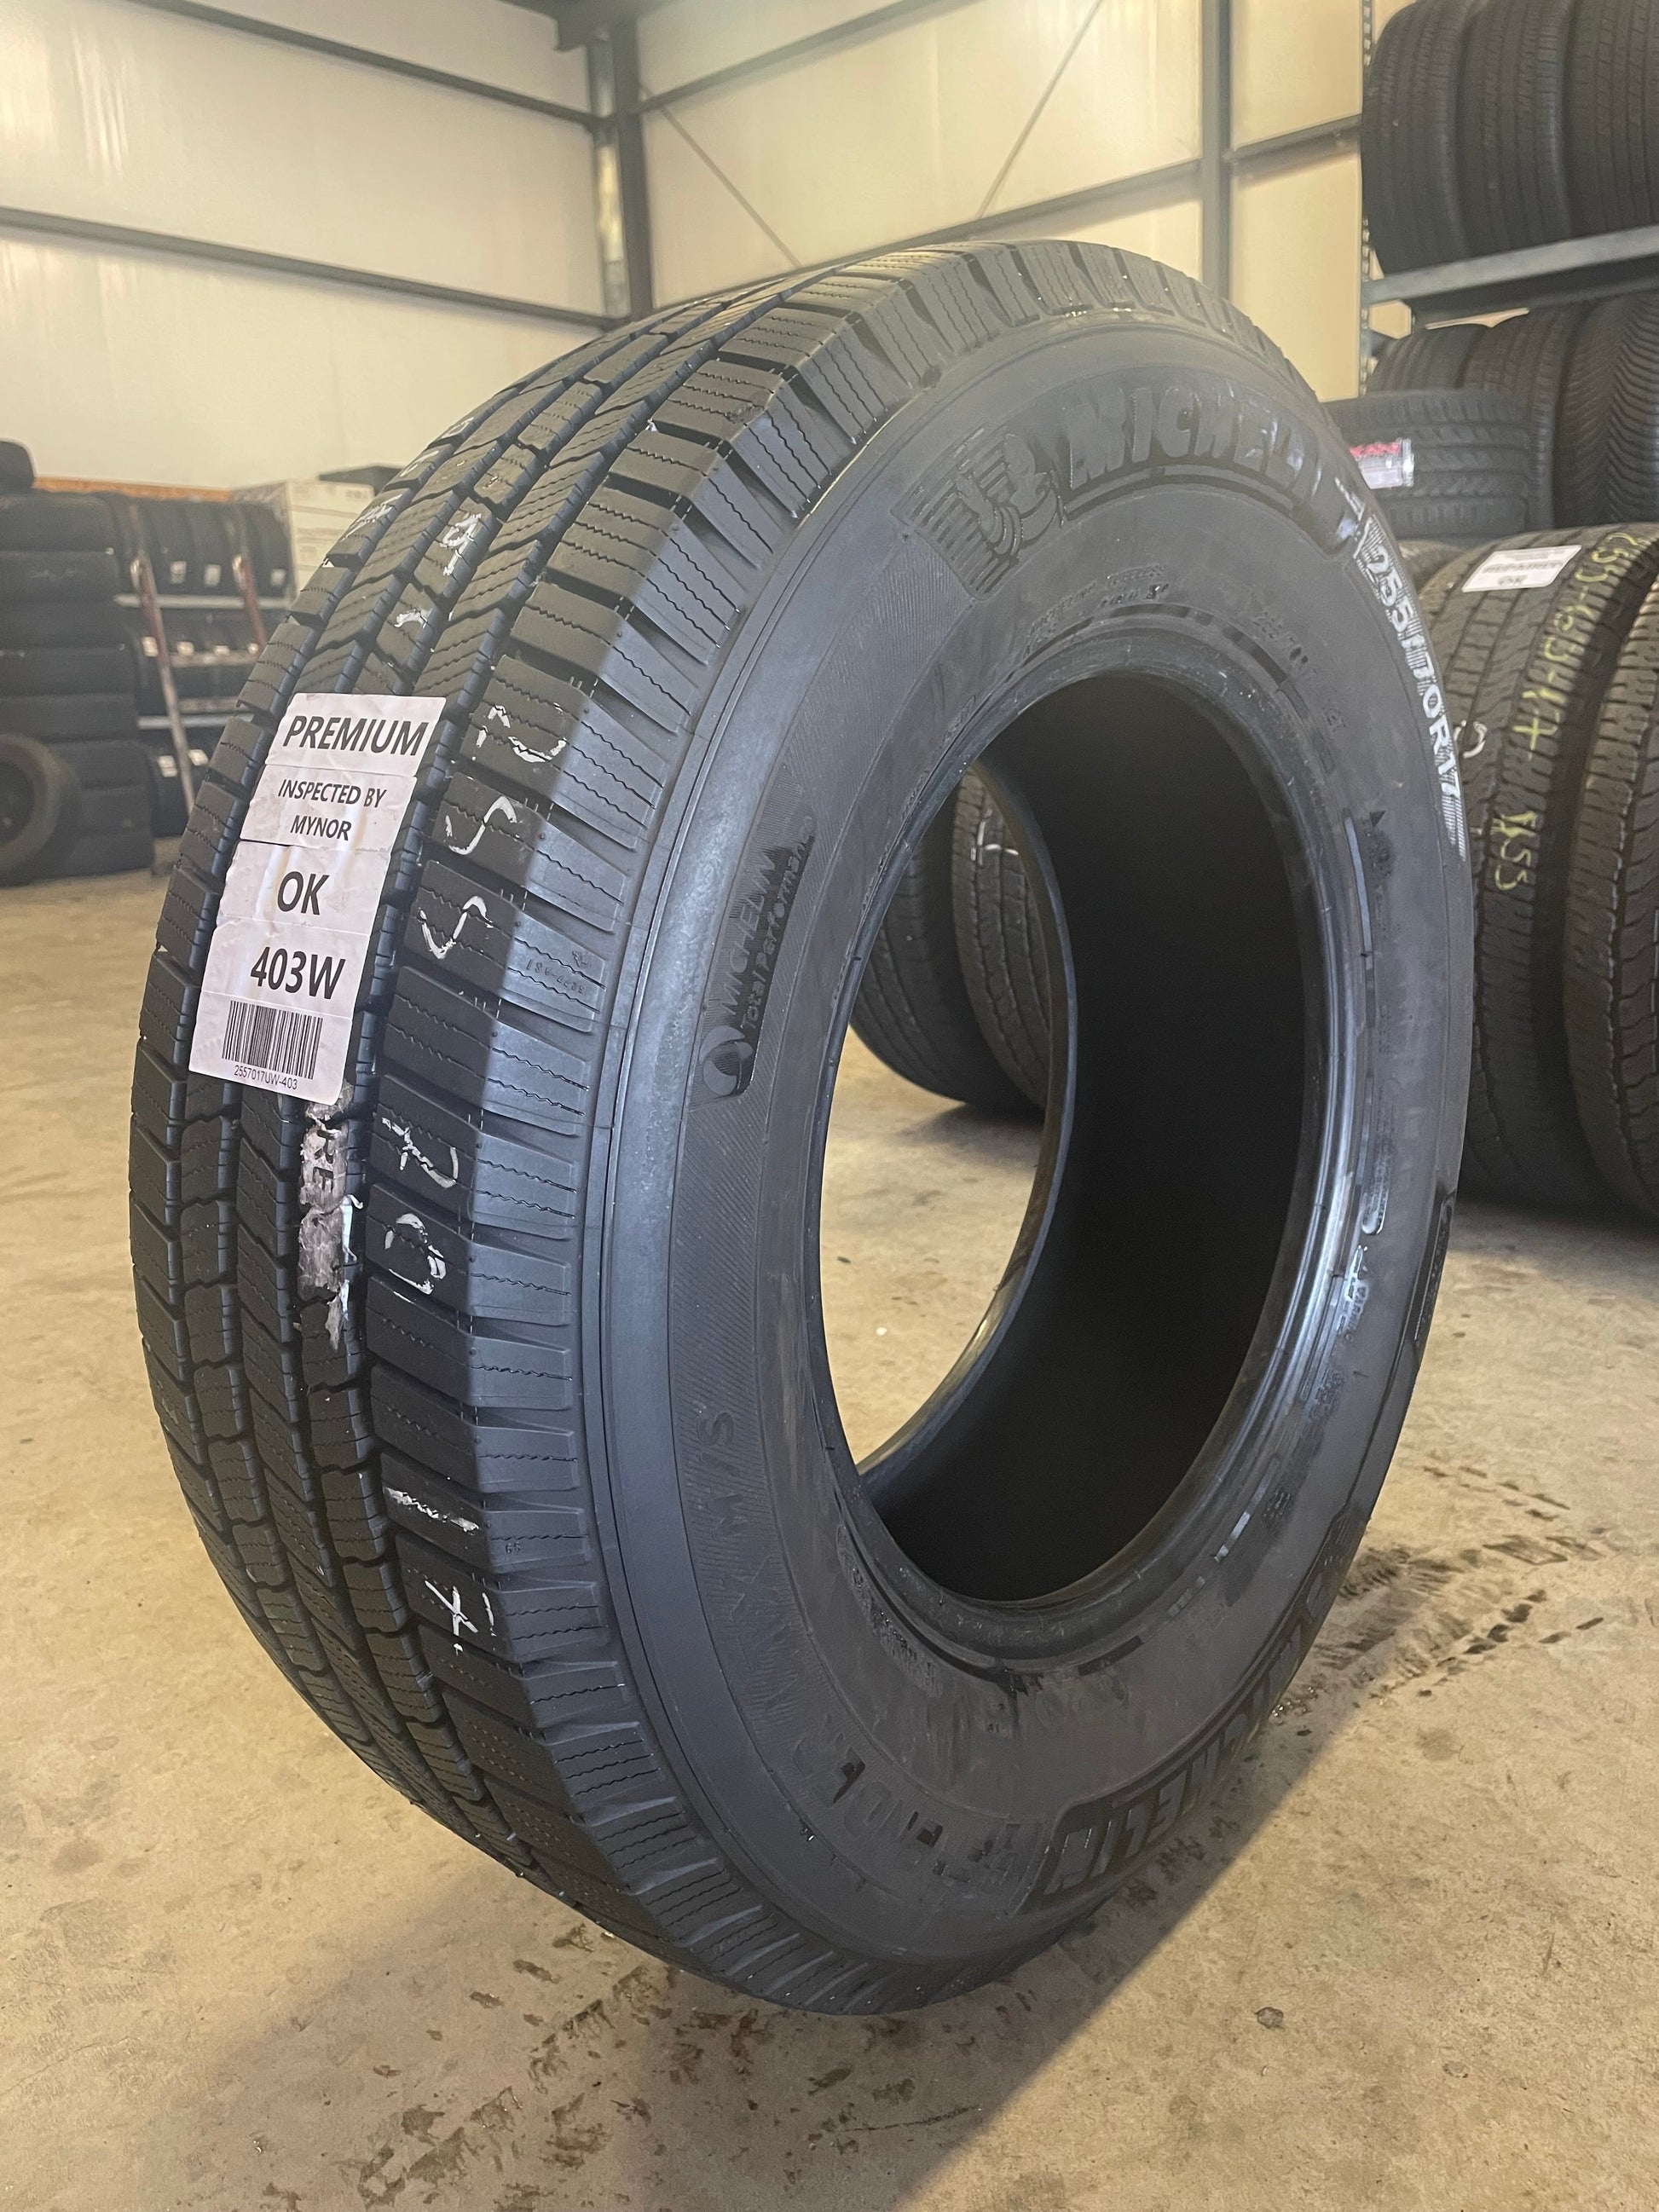 SINGLE 255/70R17 Michelin Defender LTX M/S 112 T SL - Premium Used Tires